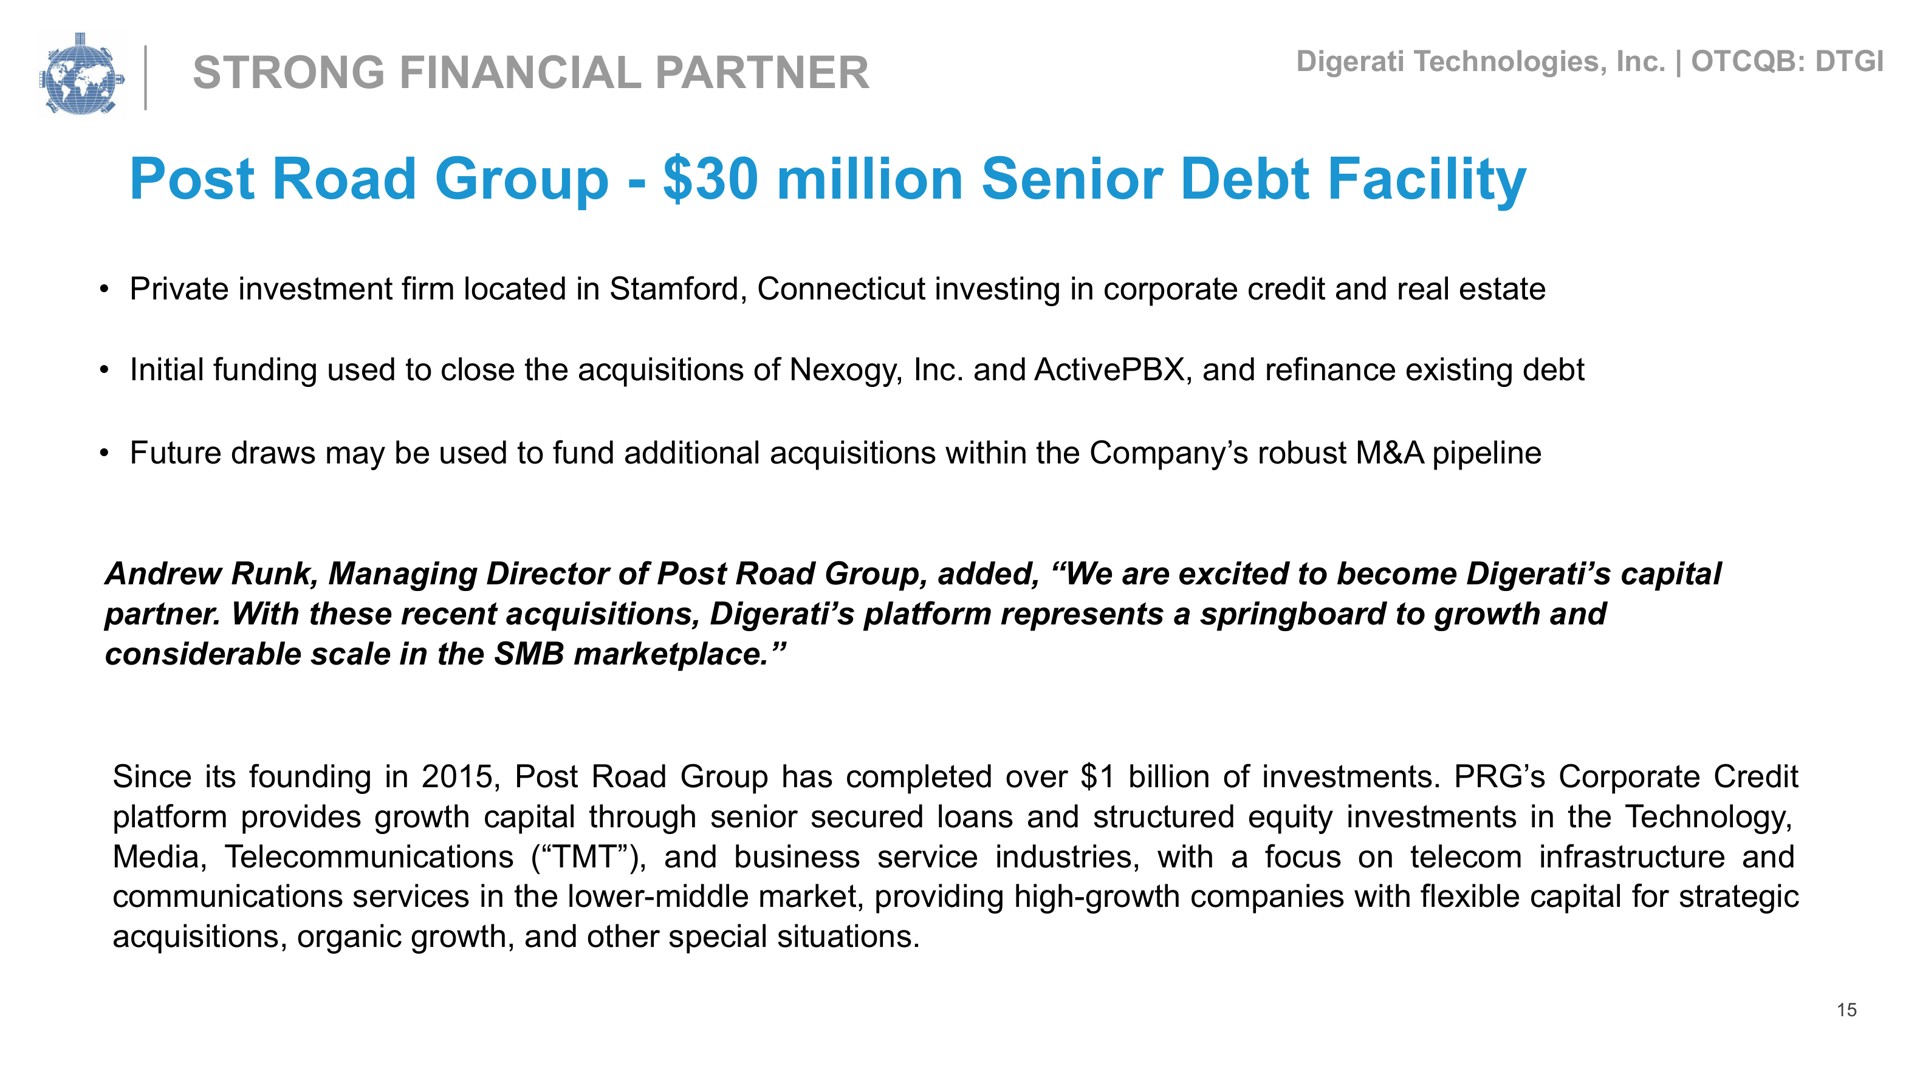 strong financial partner post road group million senior debt facility | Digerati